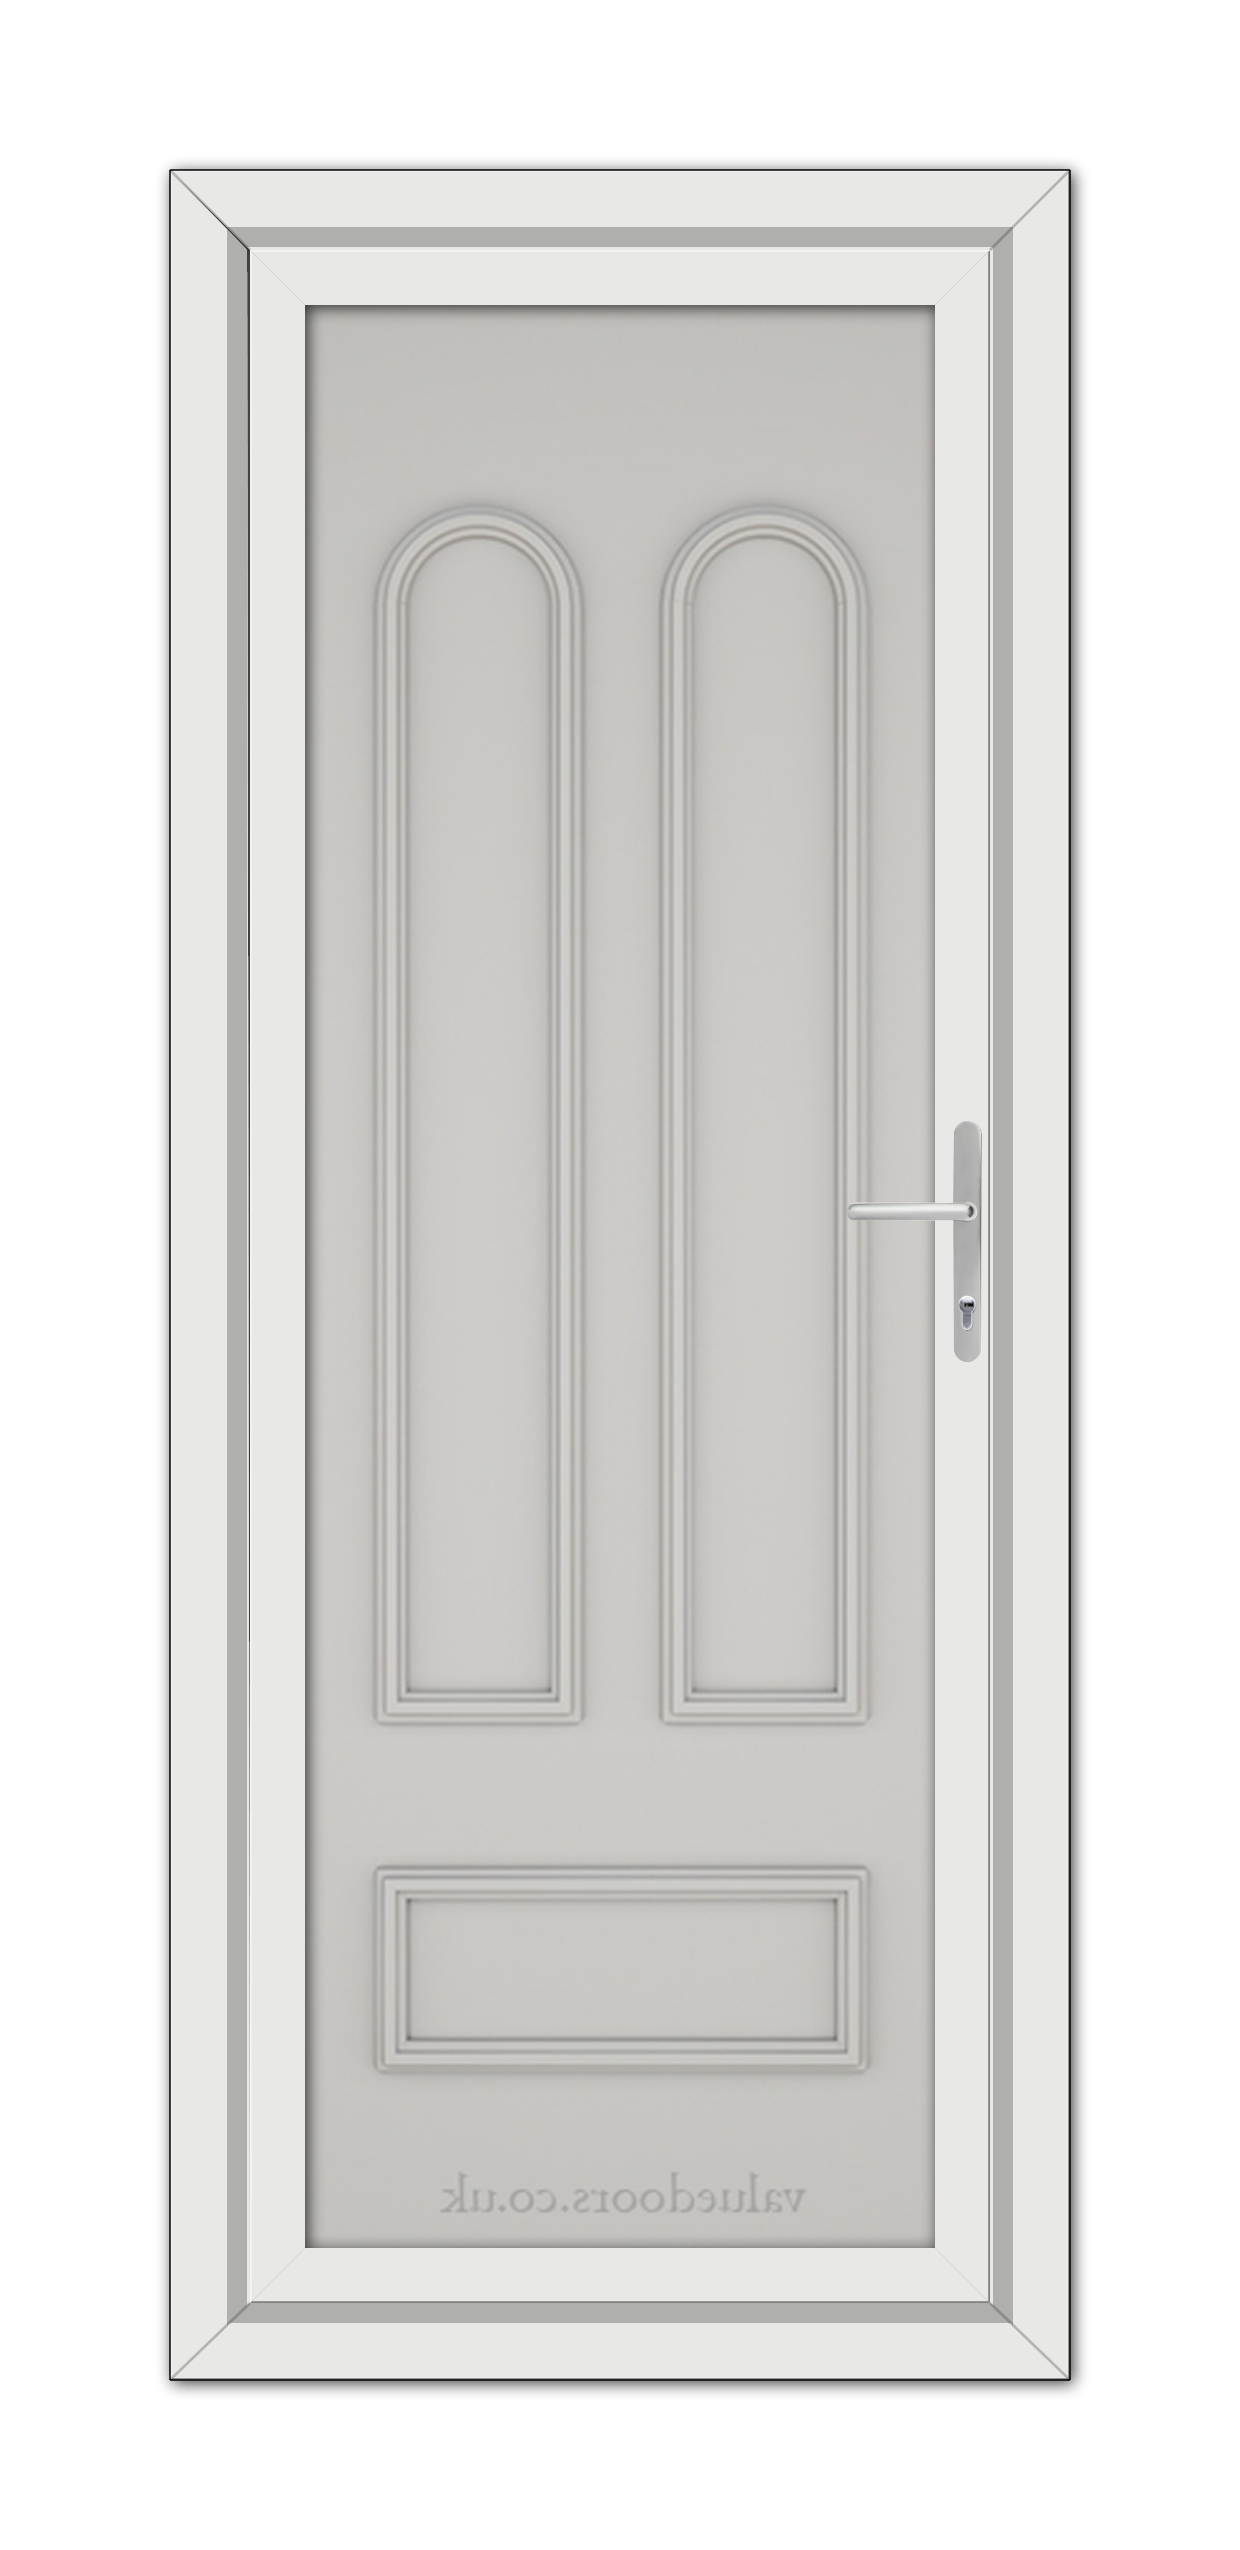 A white door with a Silver Grey Madrid Solid uPVC Door handle.